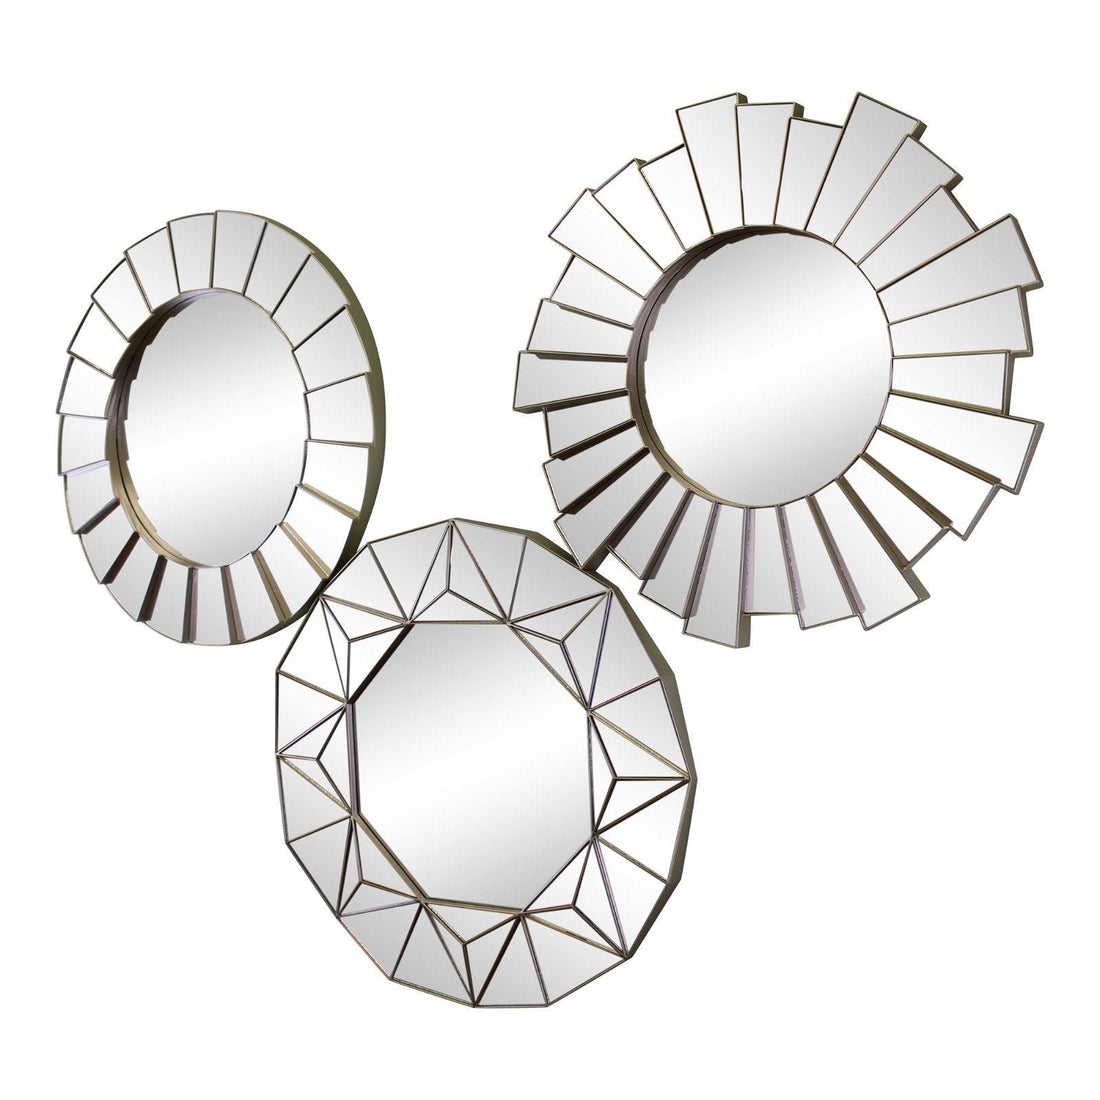 Set of 3 Geometric Style Mirrors - £73.99 - Mirrors 